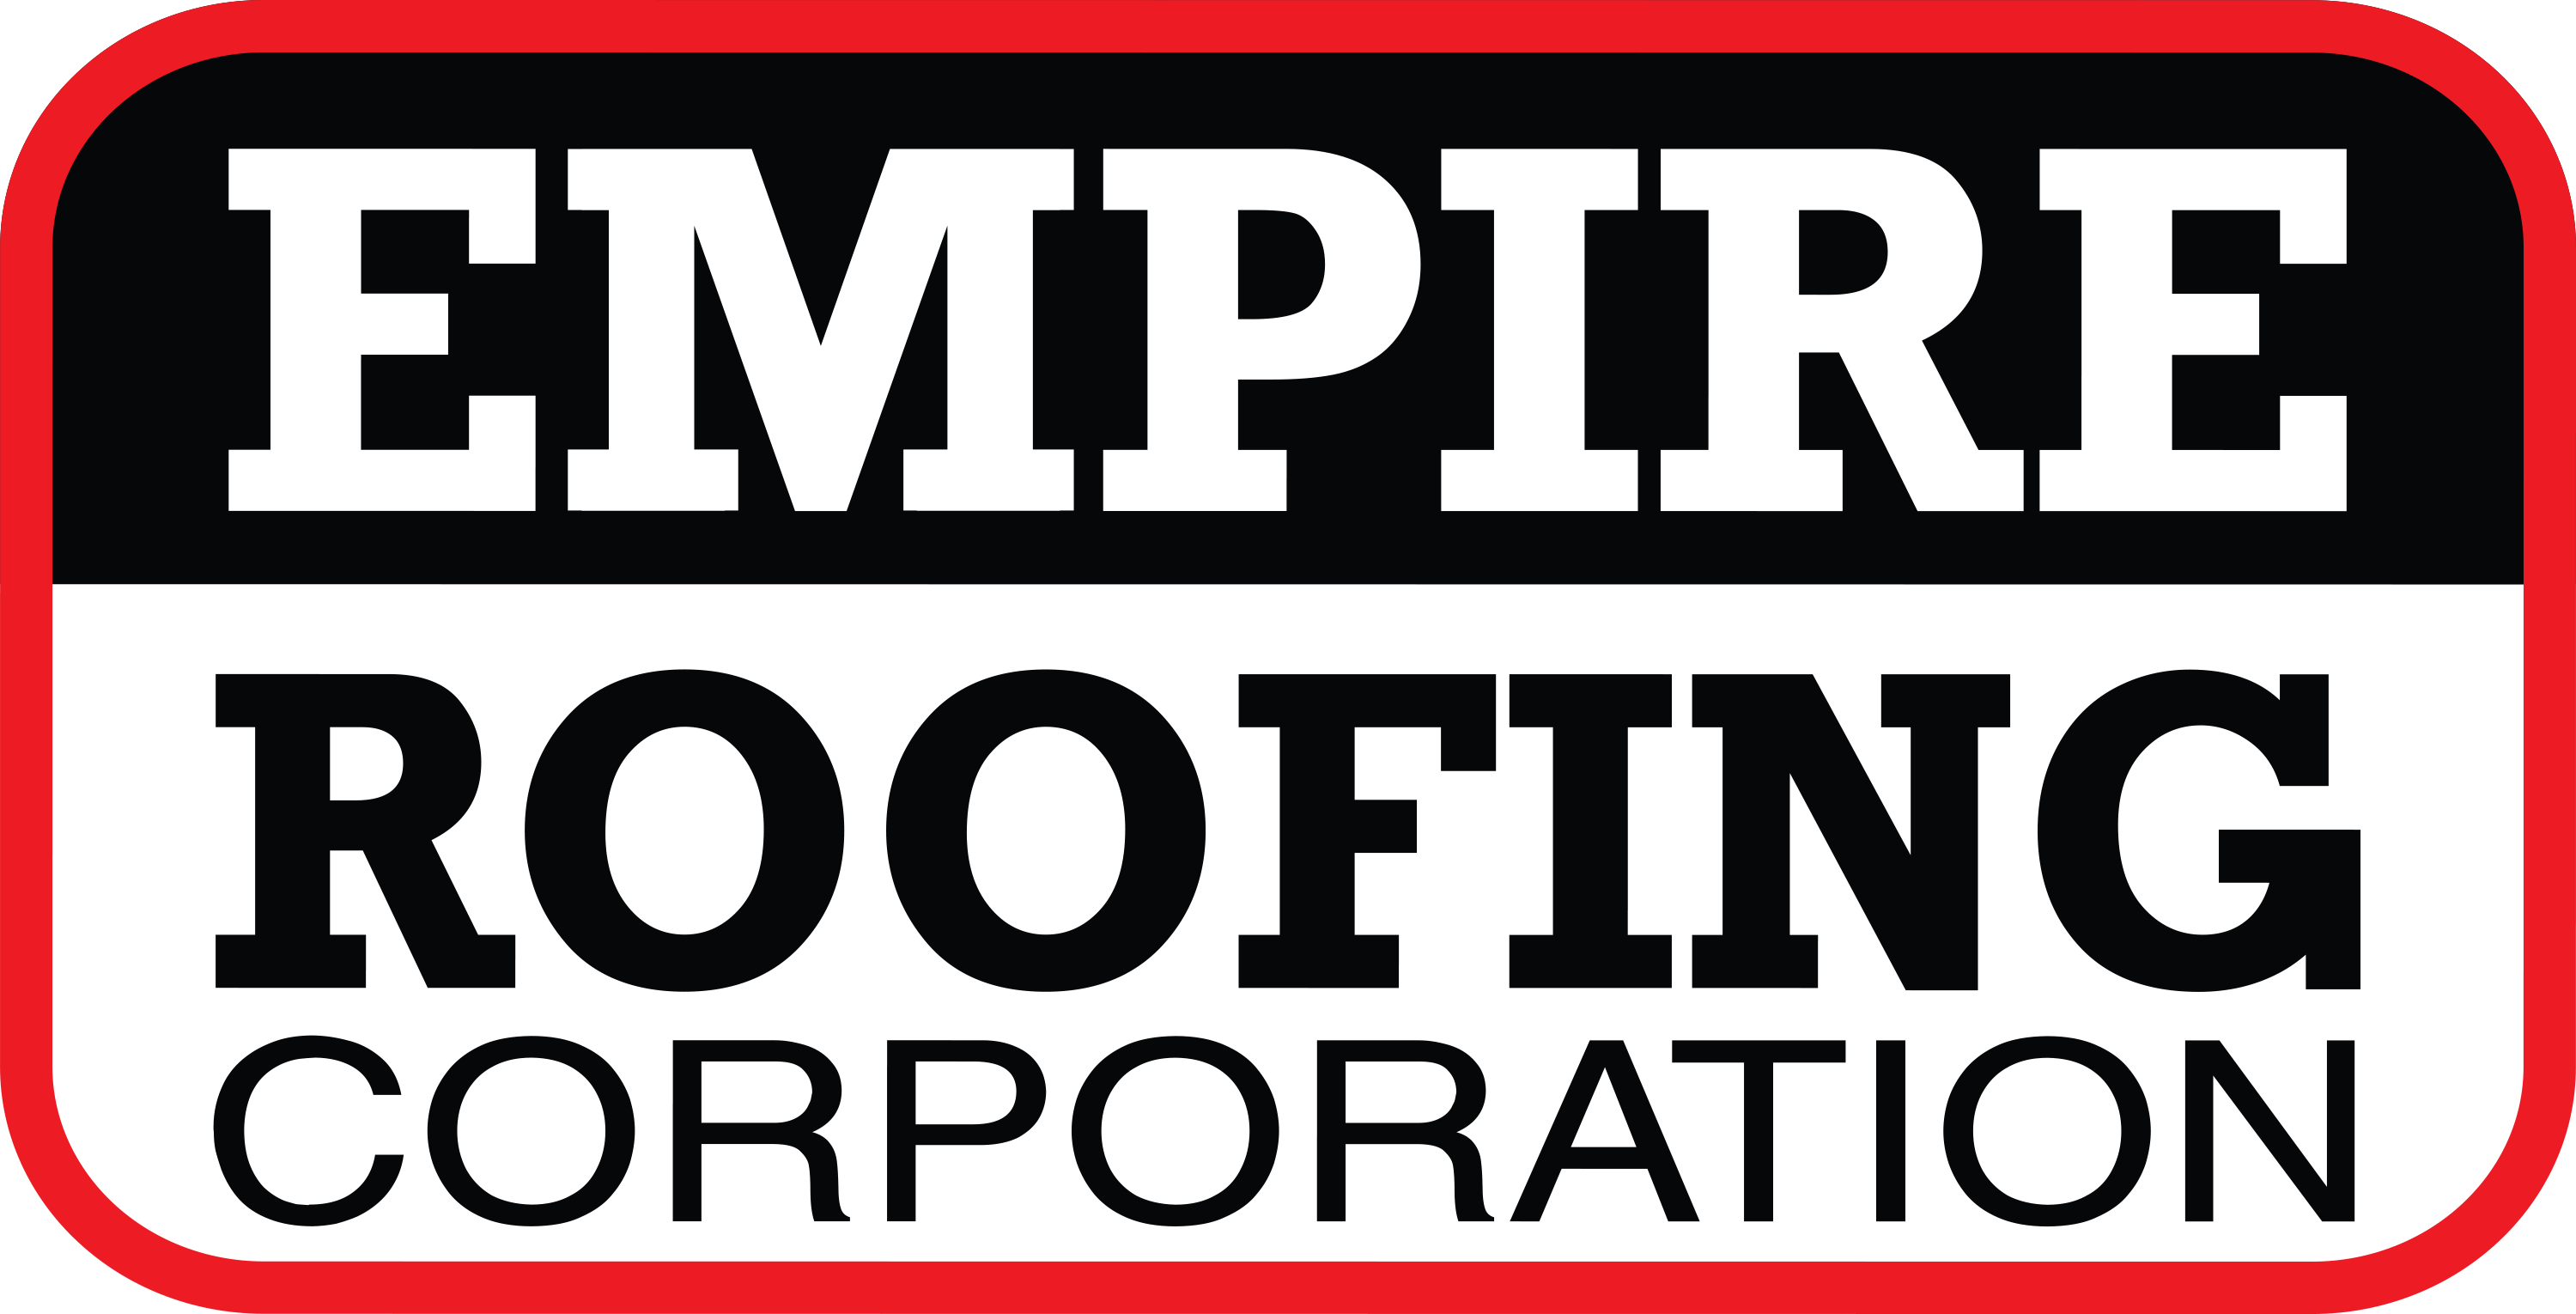 Empire Roofing Corporation logo